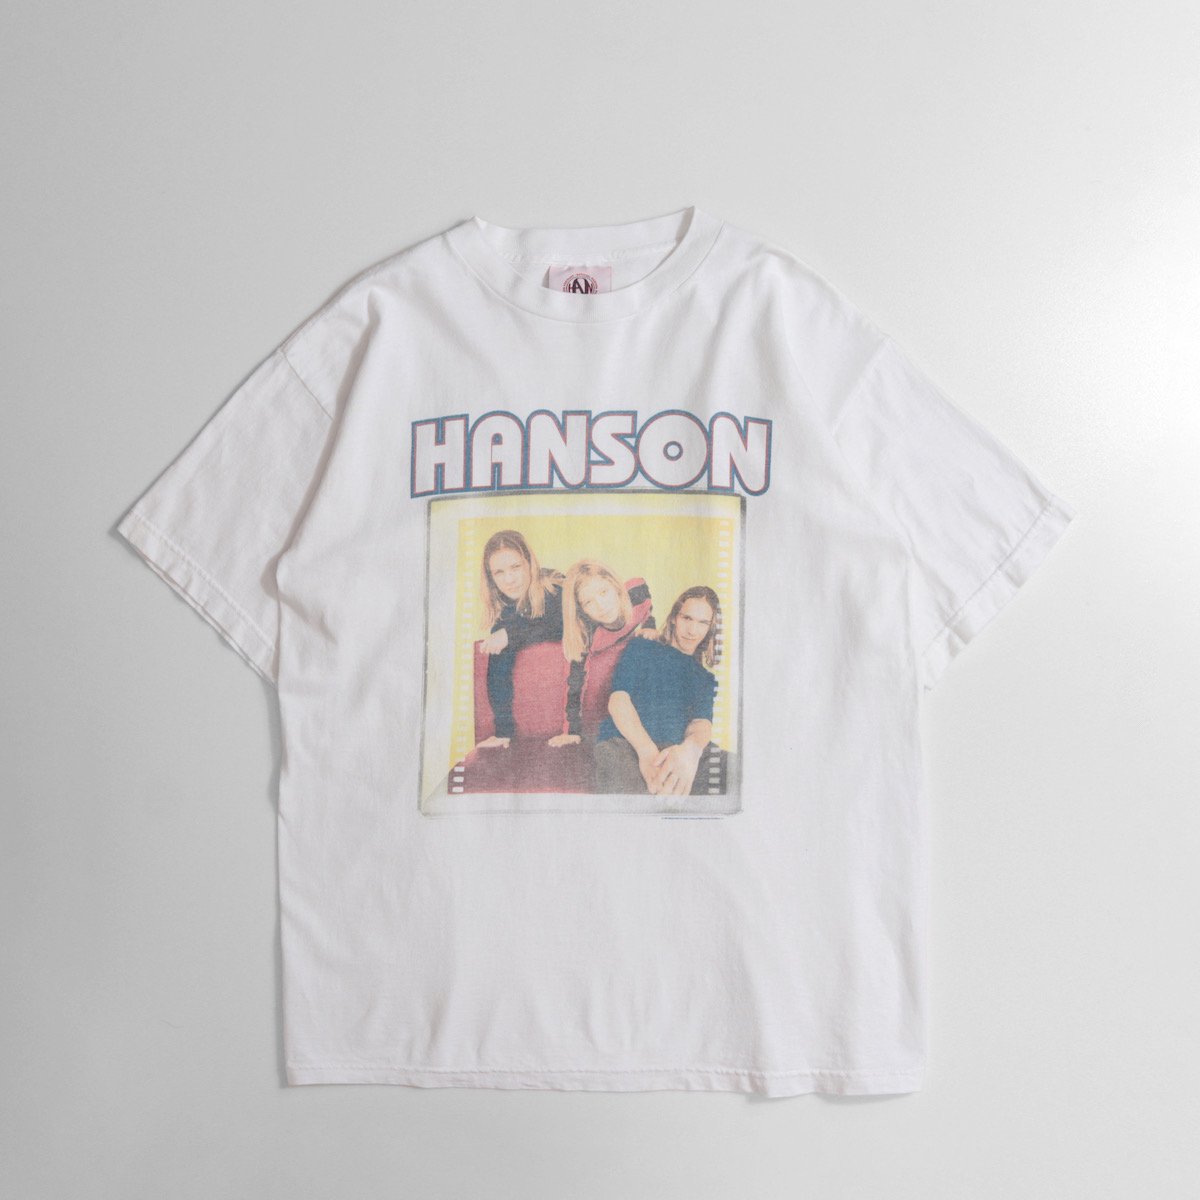 【90s】USA製 M ハンソン バンドtシャツ アンビル コピーライト ロックブラックtシャツ